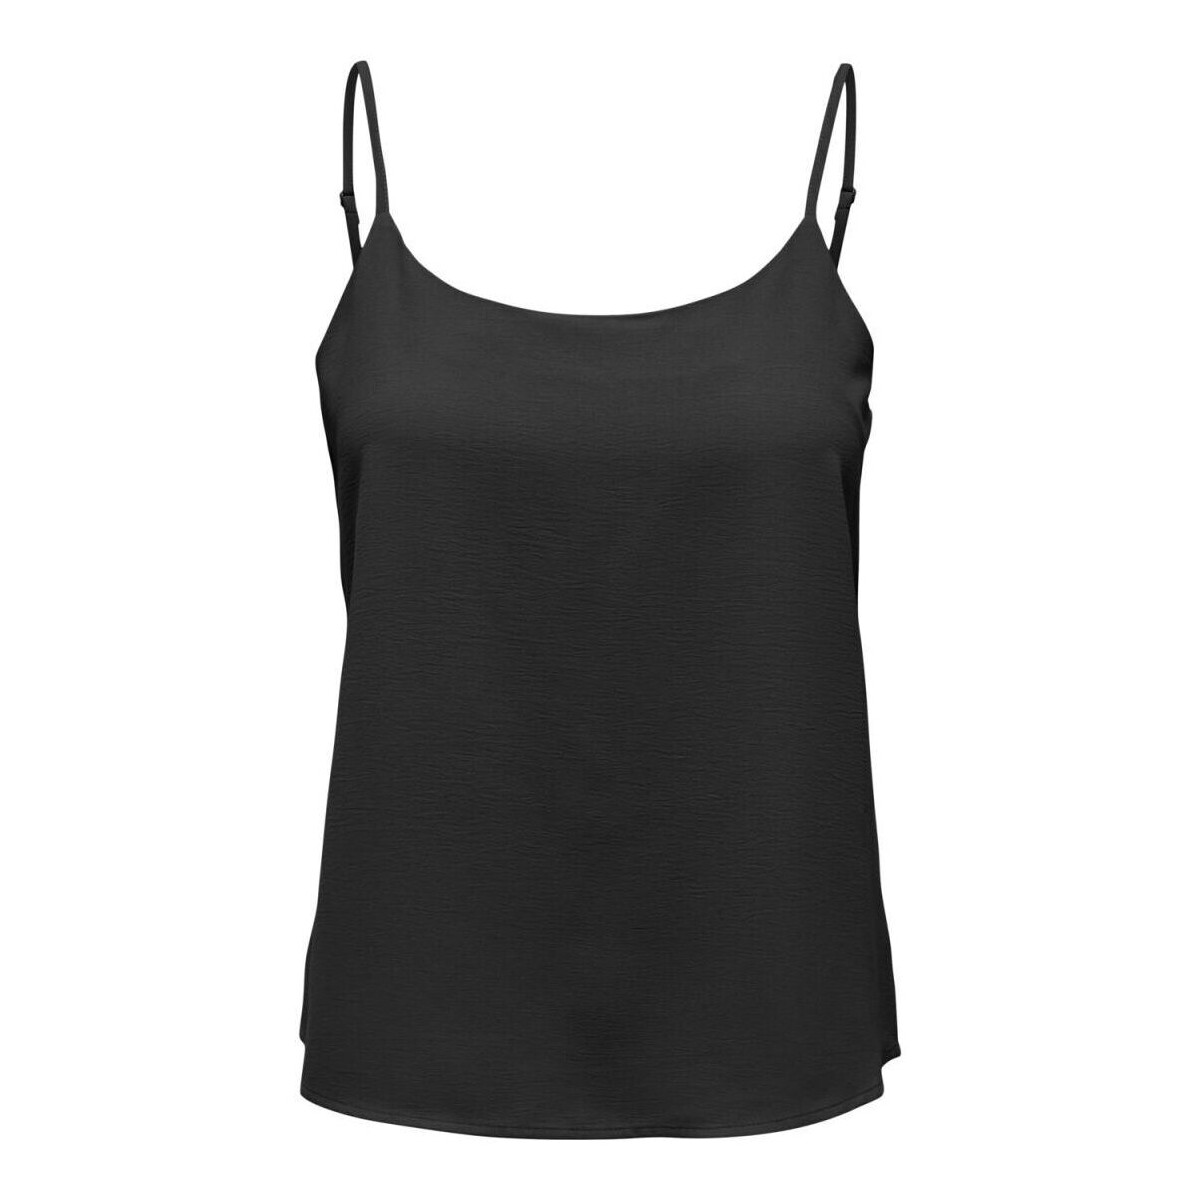 textil Mujer Camisetas sin mangas Only 15284314 METTE-BLACK Negro